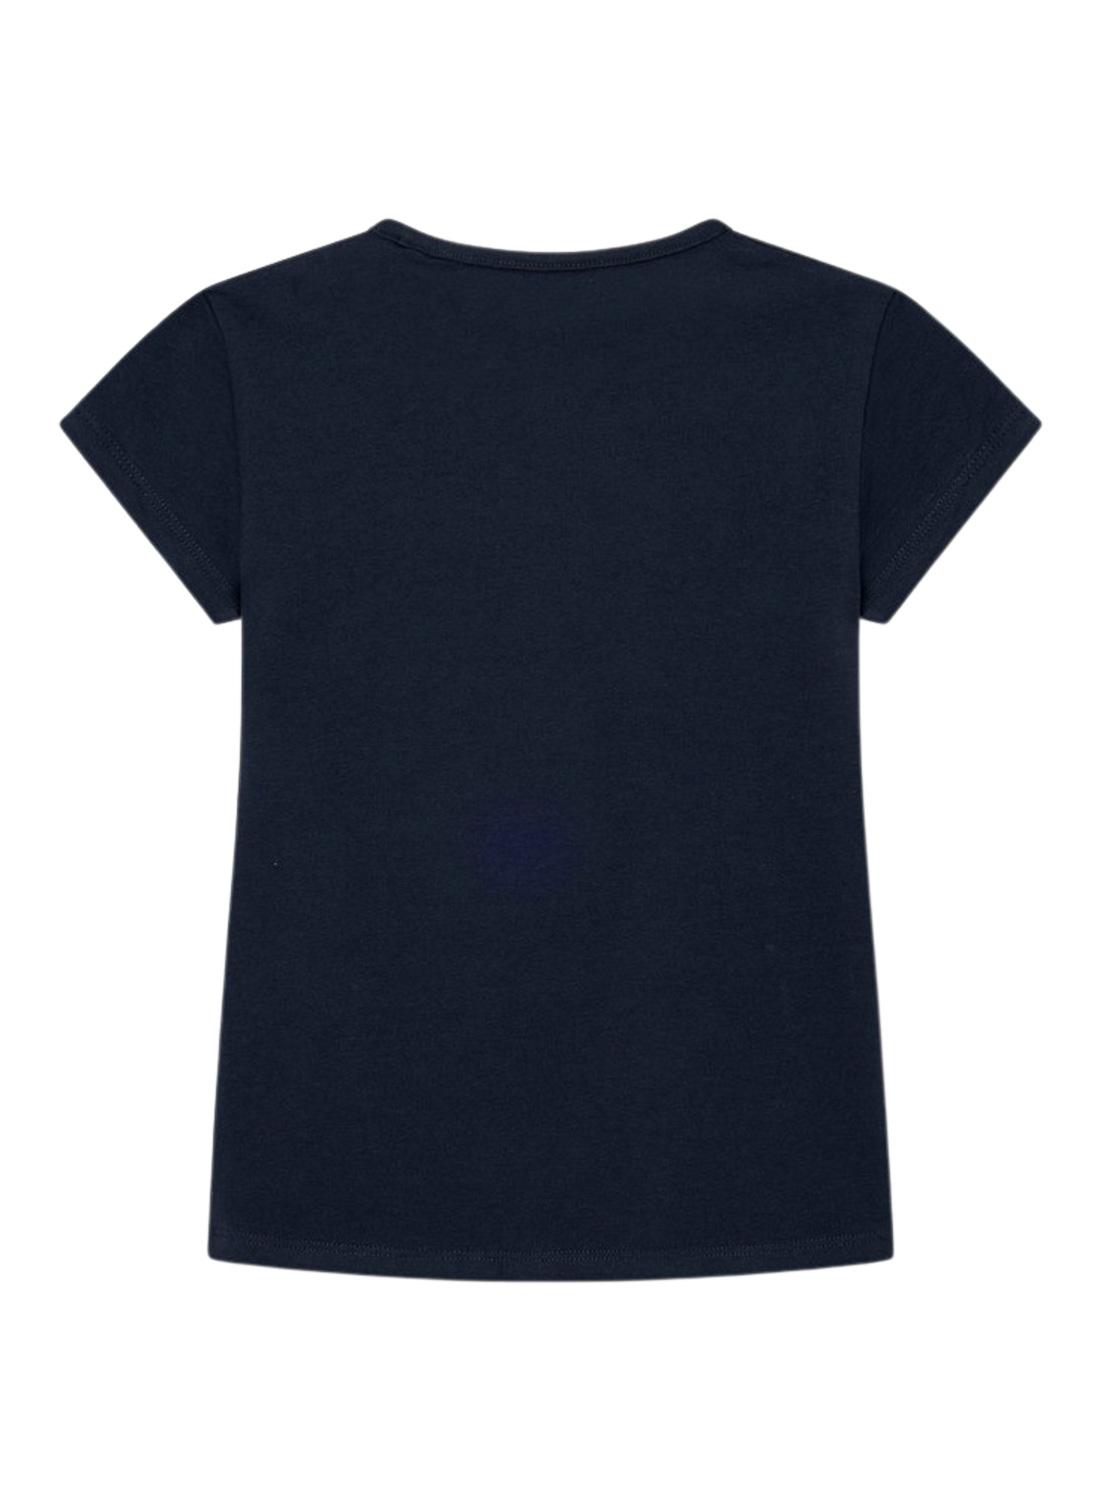 T-Shirt Pepe Jeans Hana Glitter Blu Navy per Bambina